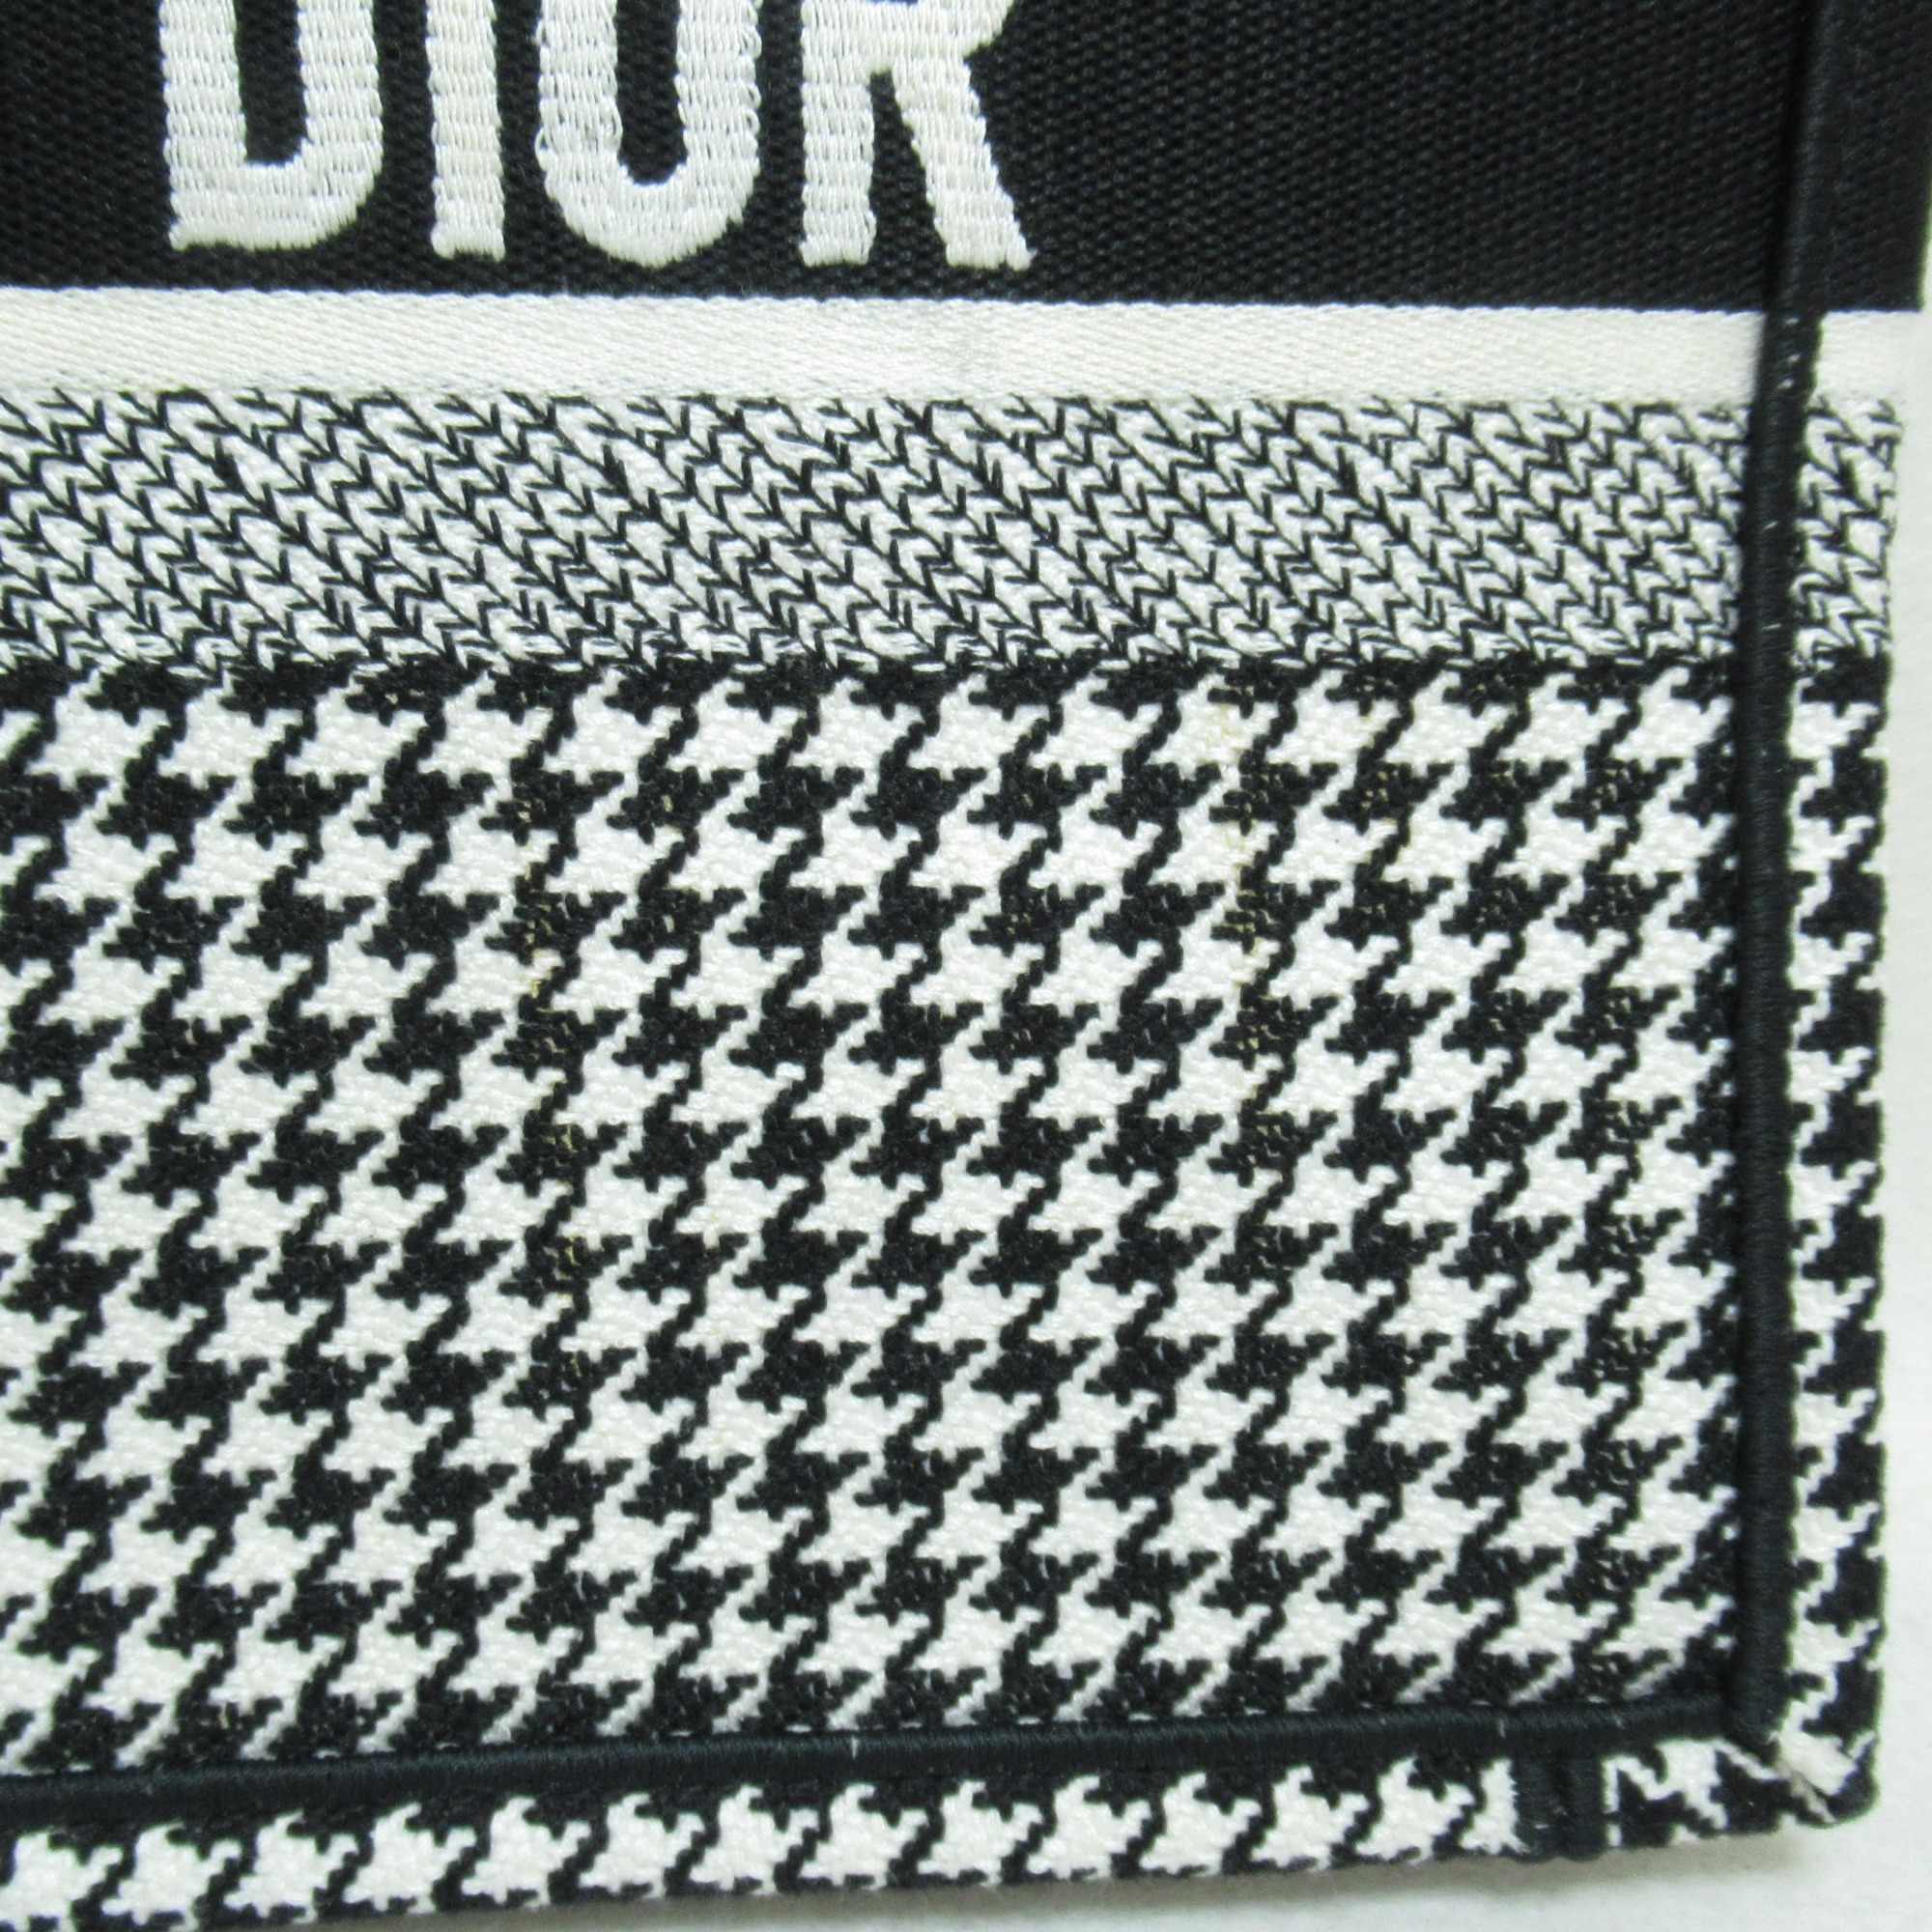 Dior book tote bag Black White canvas M1296ZRPI